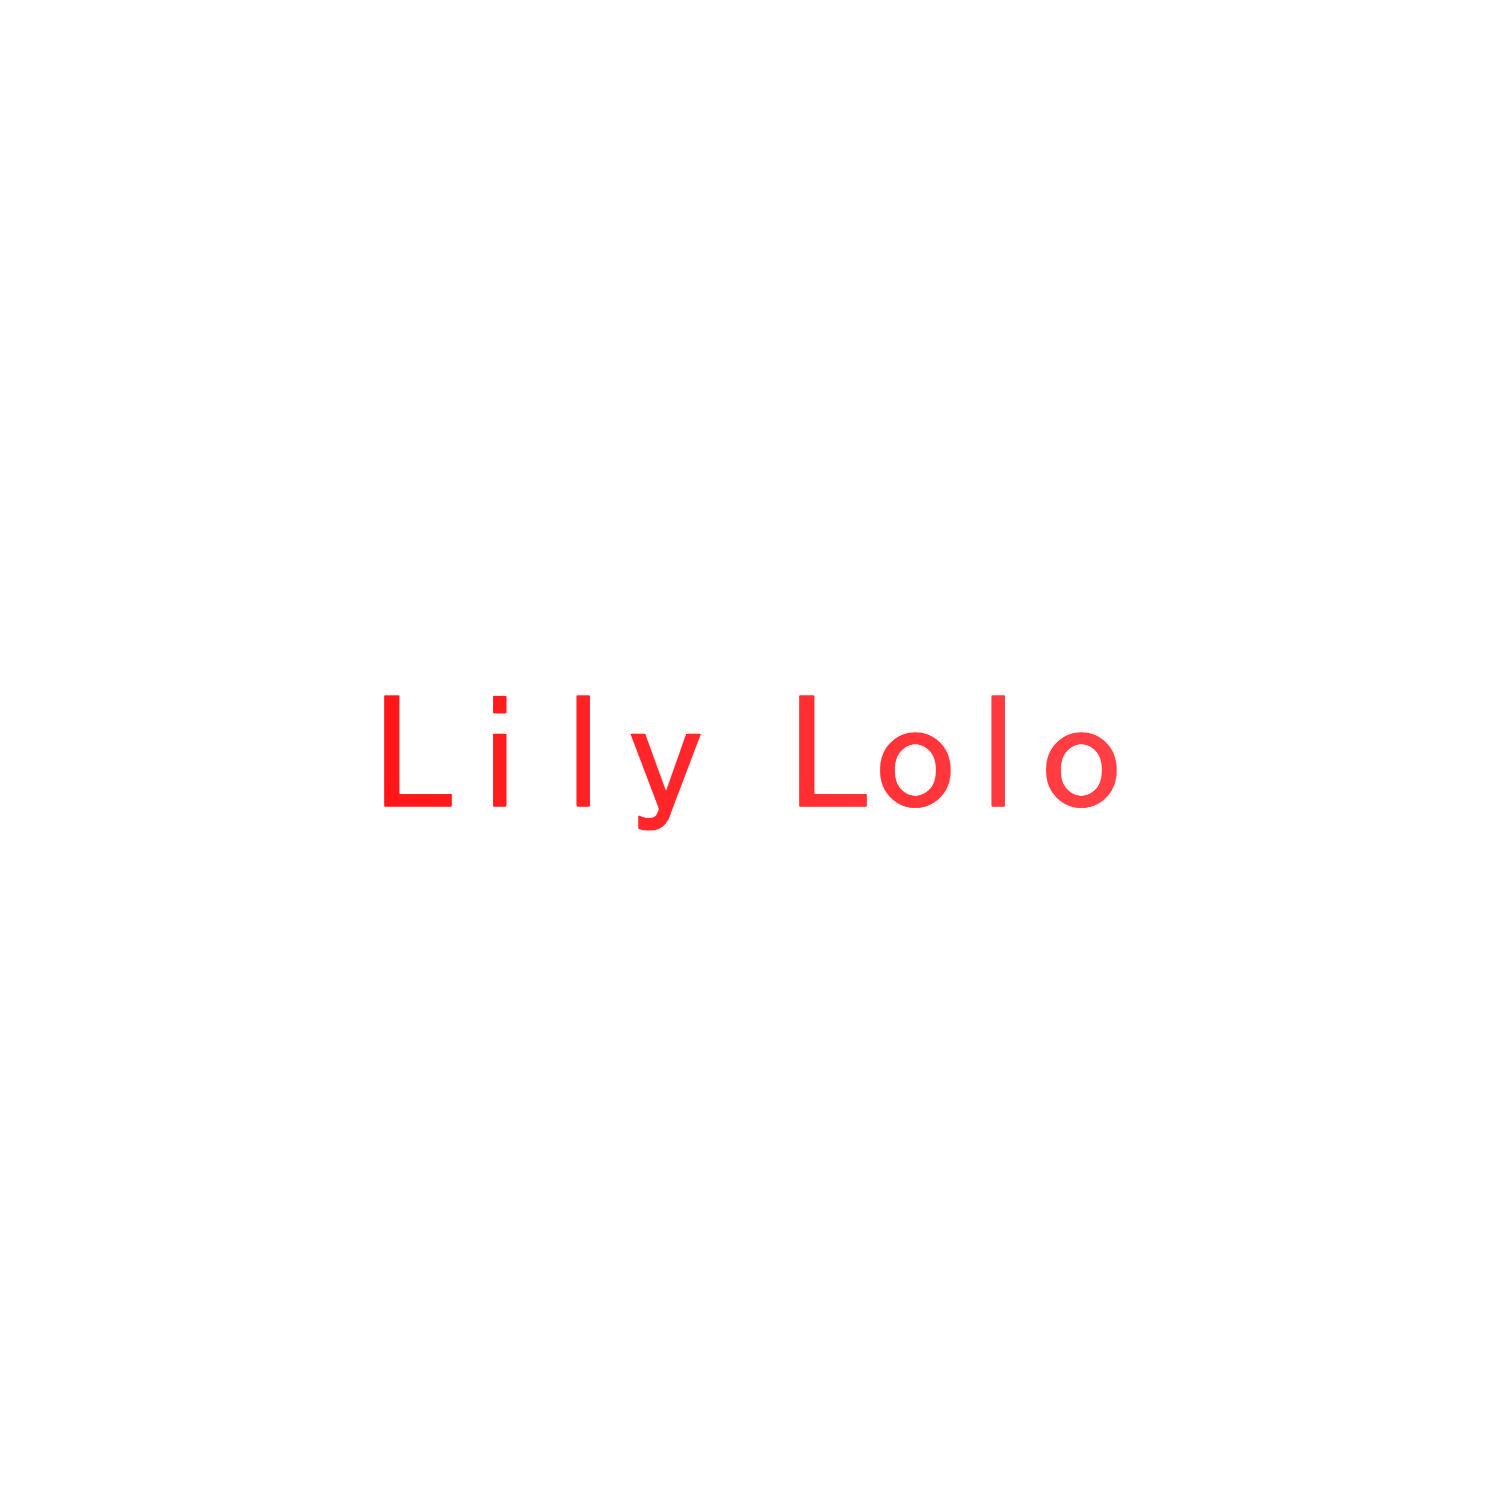 LILY LOLO